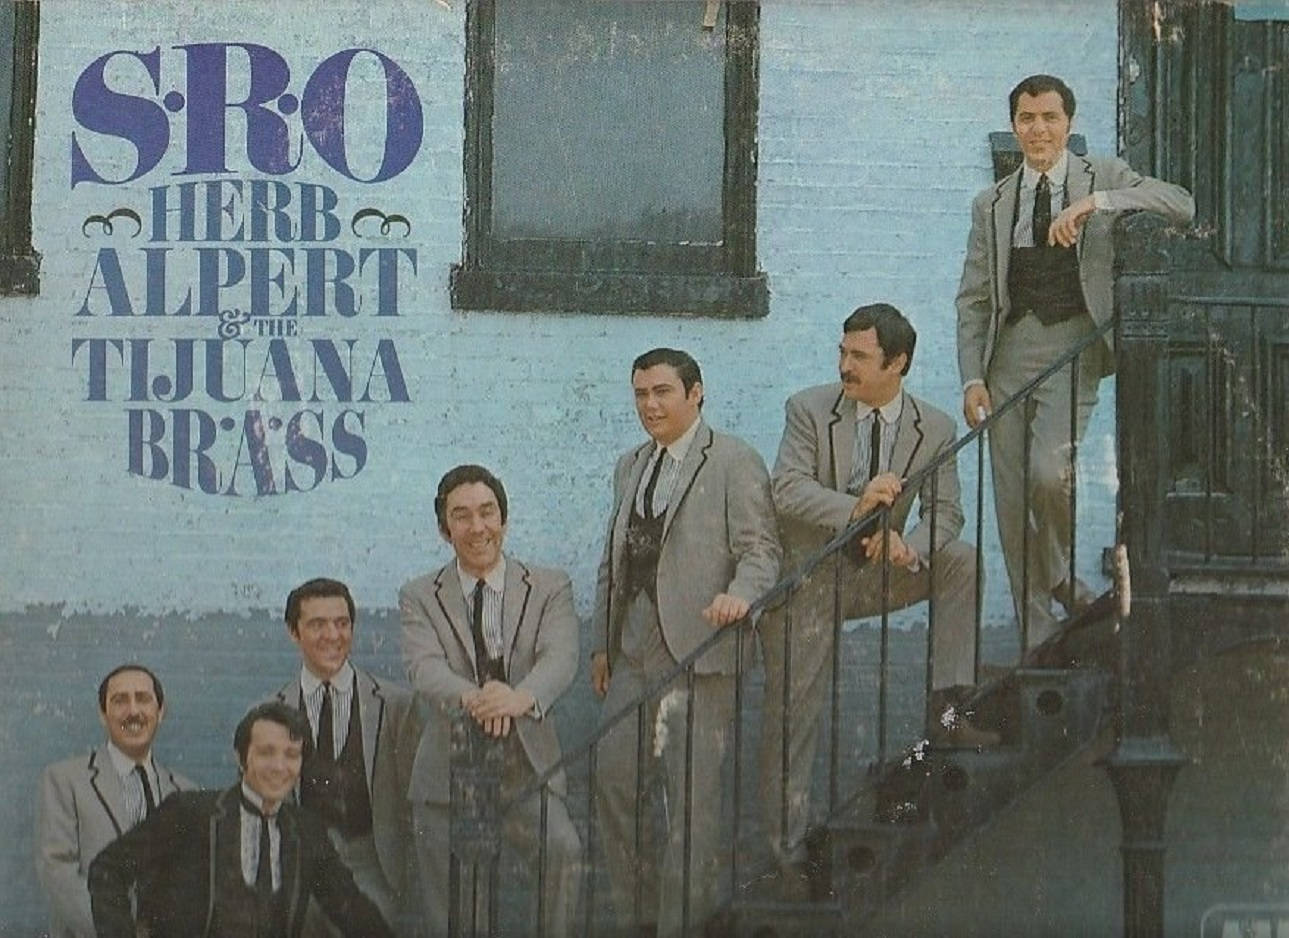 Herbalpert Und The Tijuana Brass - Album S.r.o. Wallpaper